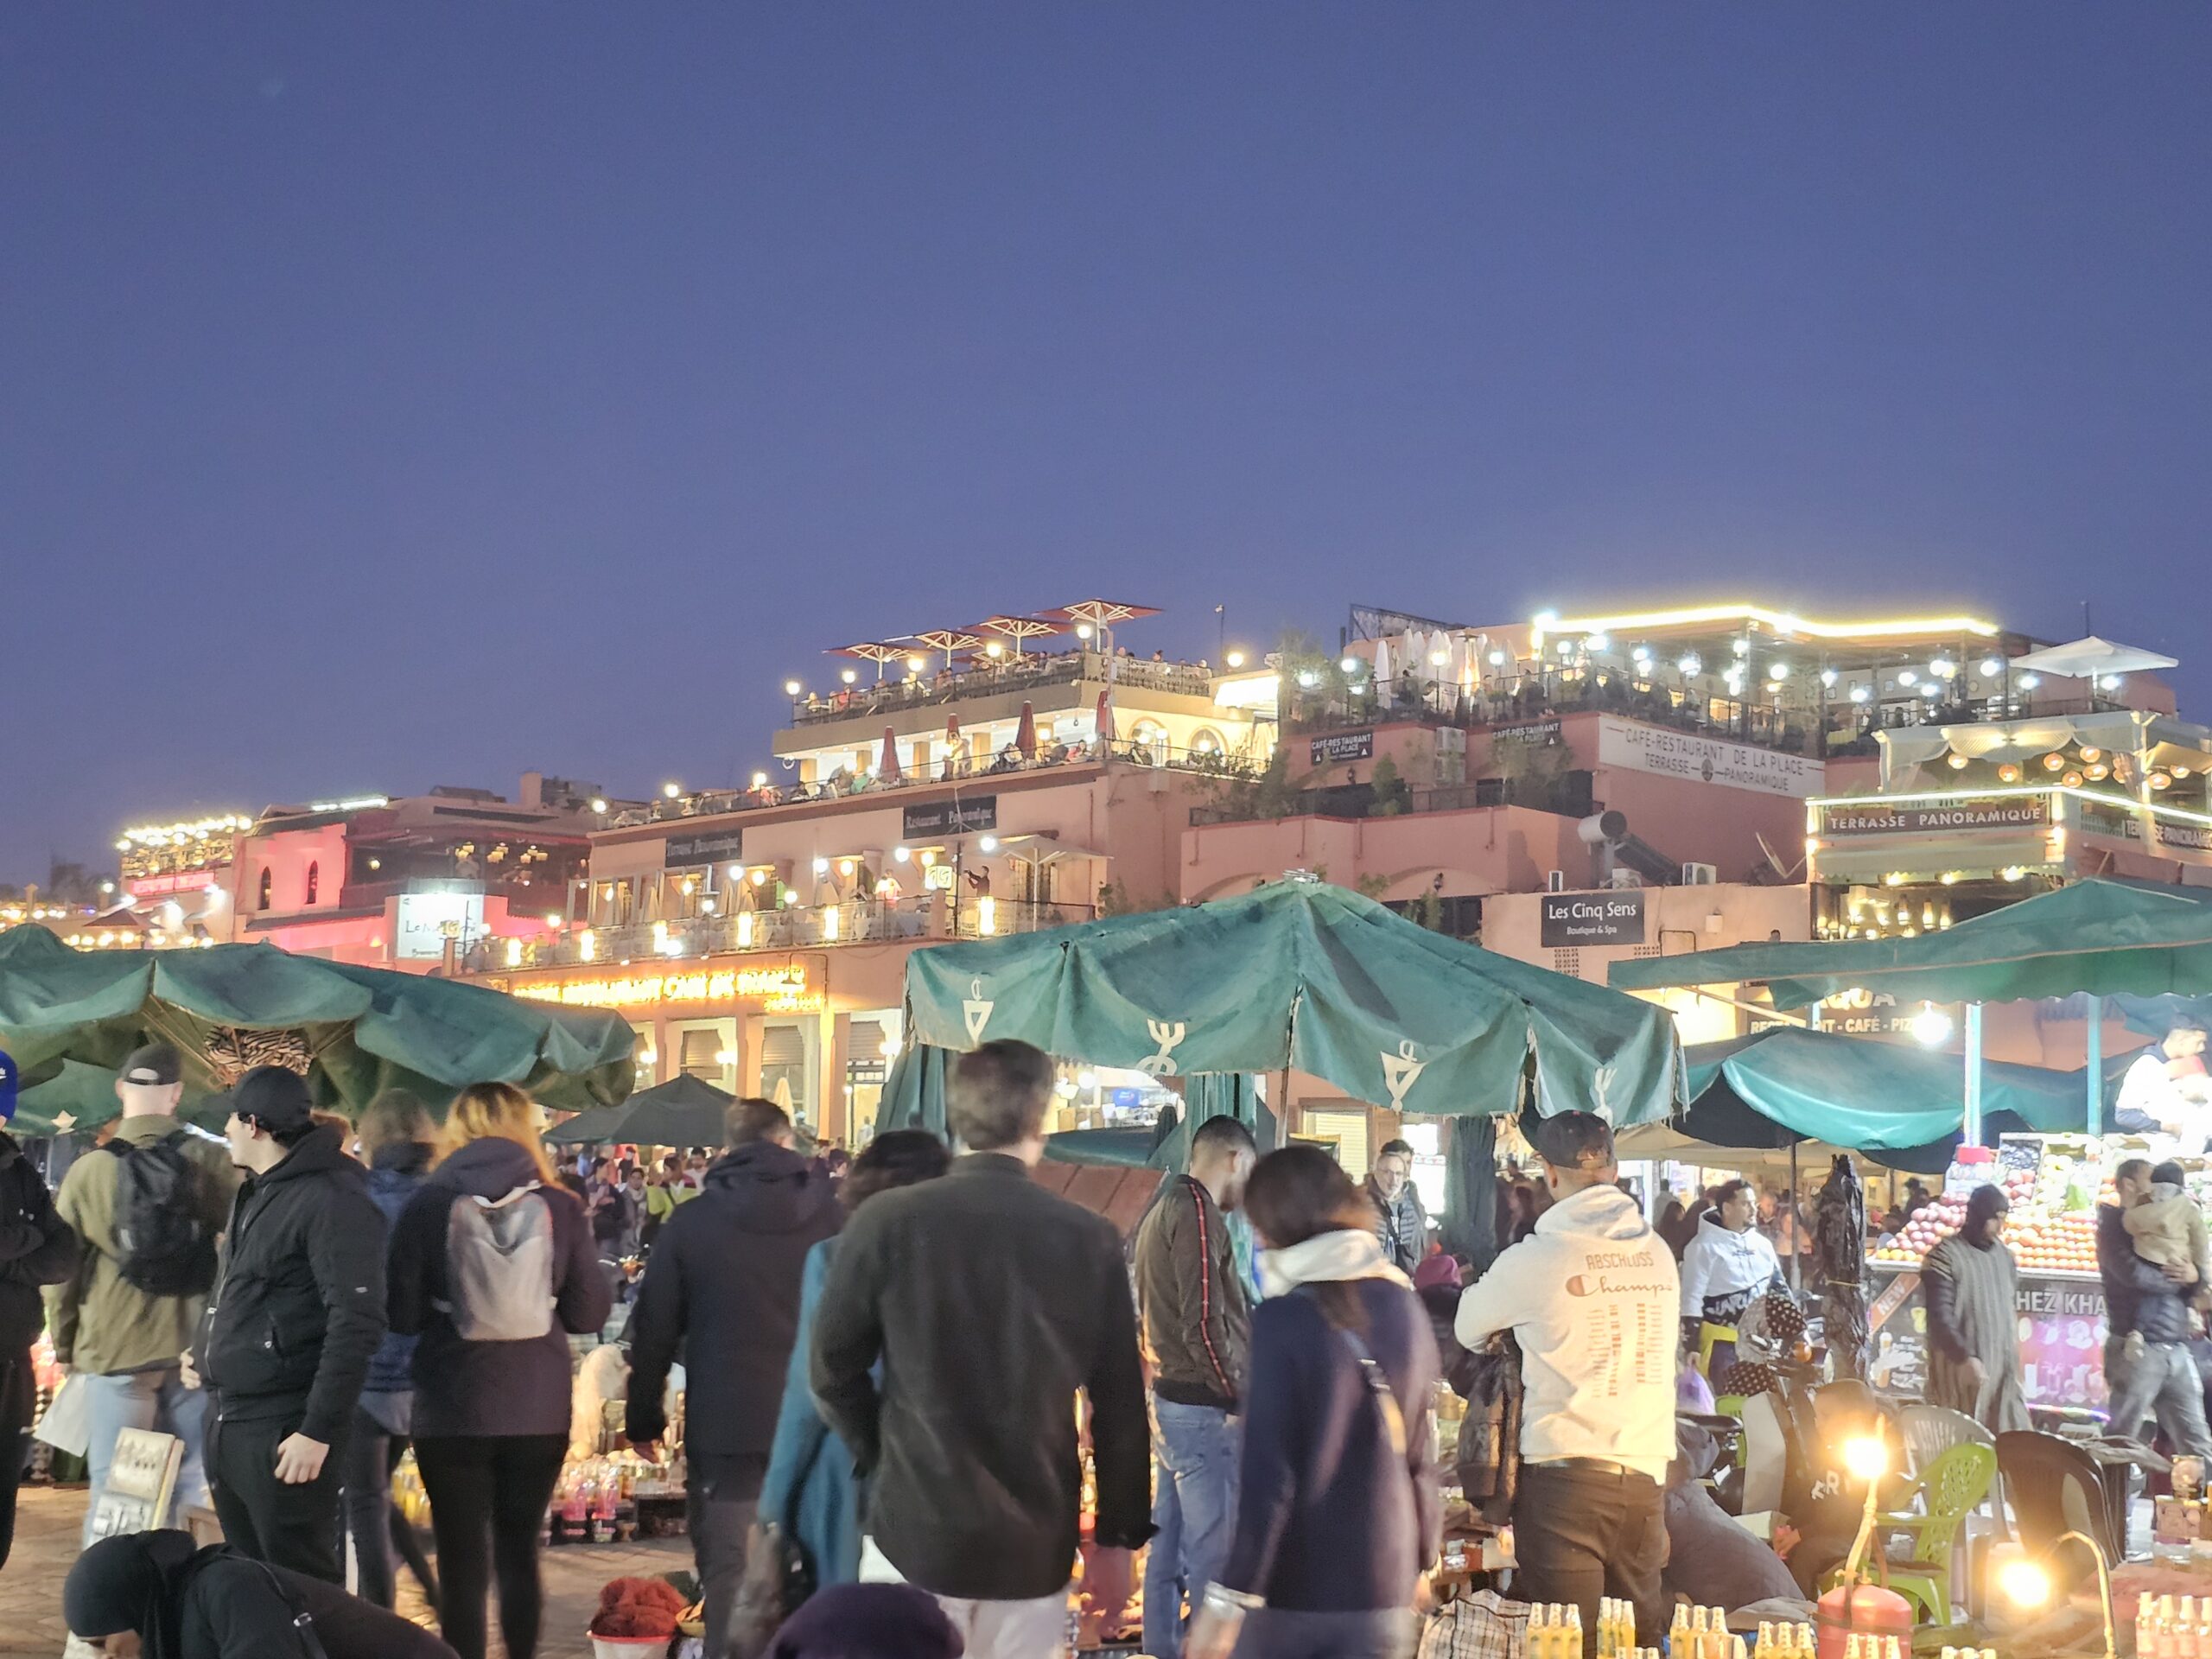 People bustling around at Jemaa el Fnaa at night. Image by 360onhistory.com